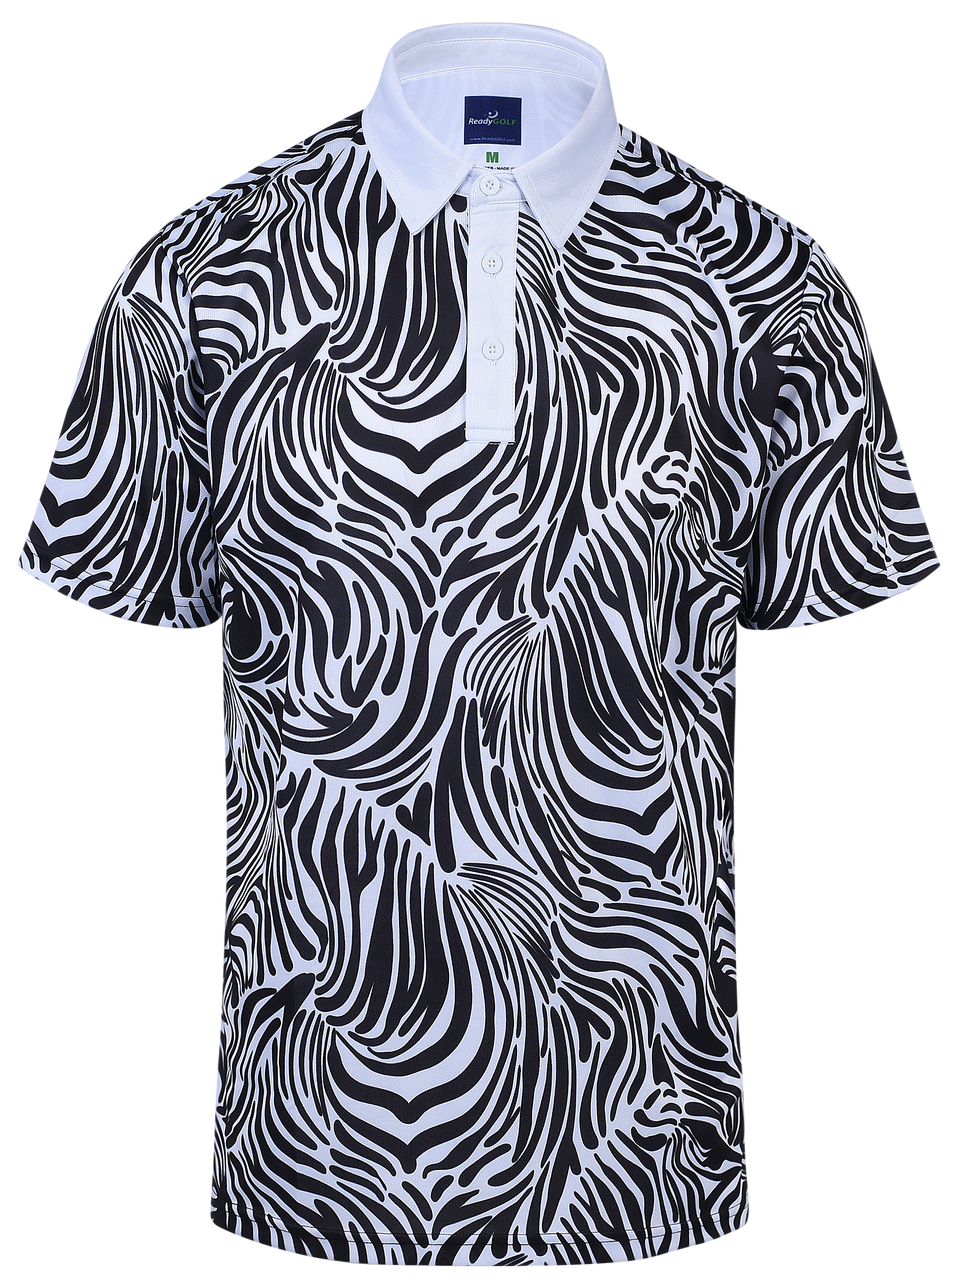 ReadyGOLF Mens Golf Polo Shirt - Zebra in the Print